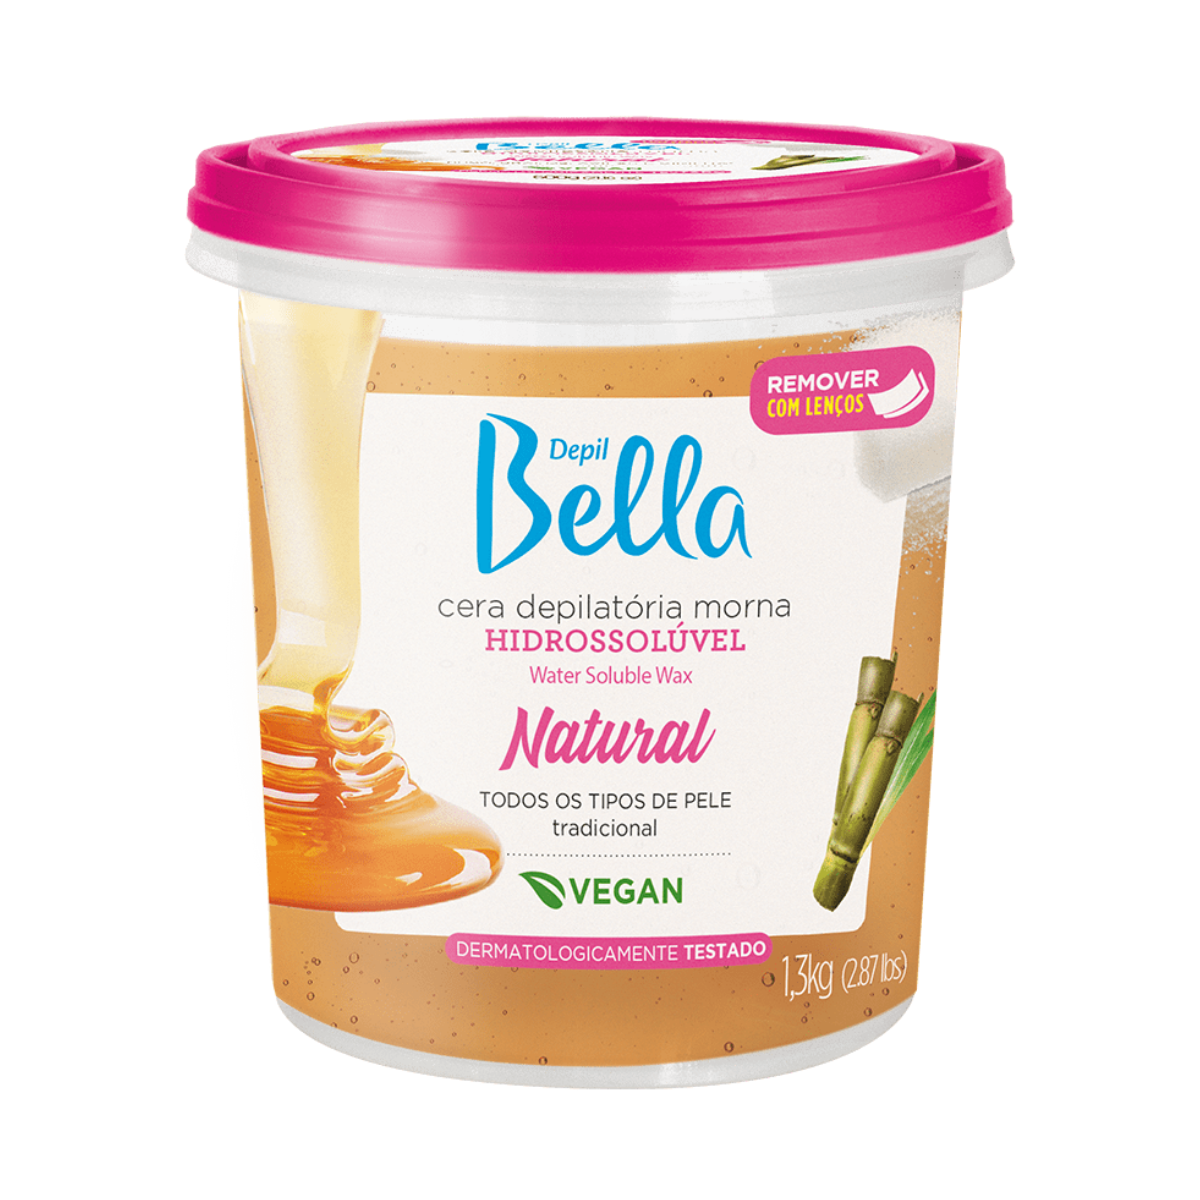 Depil Bella Full Body Sugar Wax Natural, Hair Remover 1300g - depilcompany